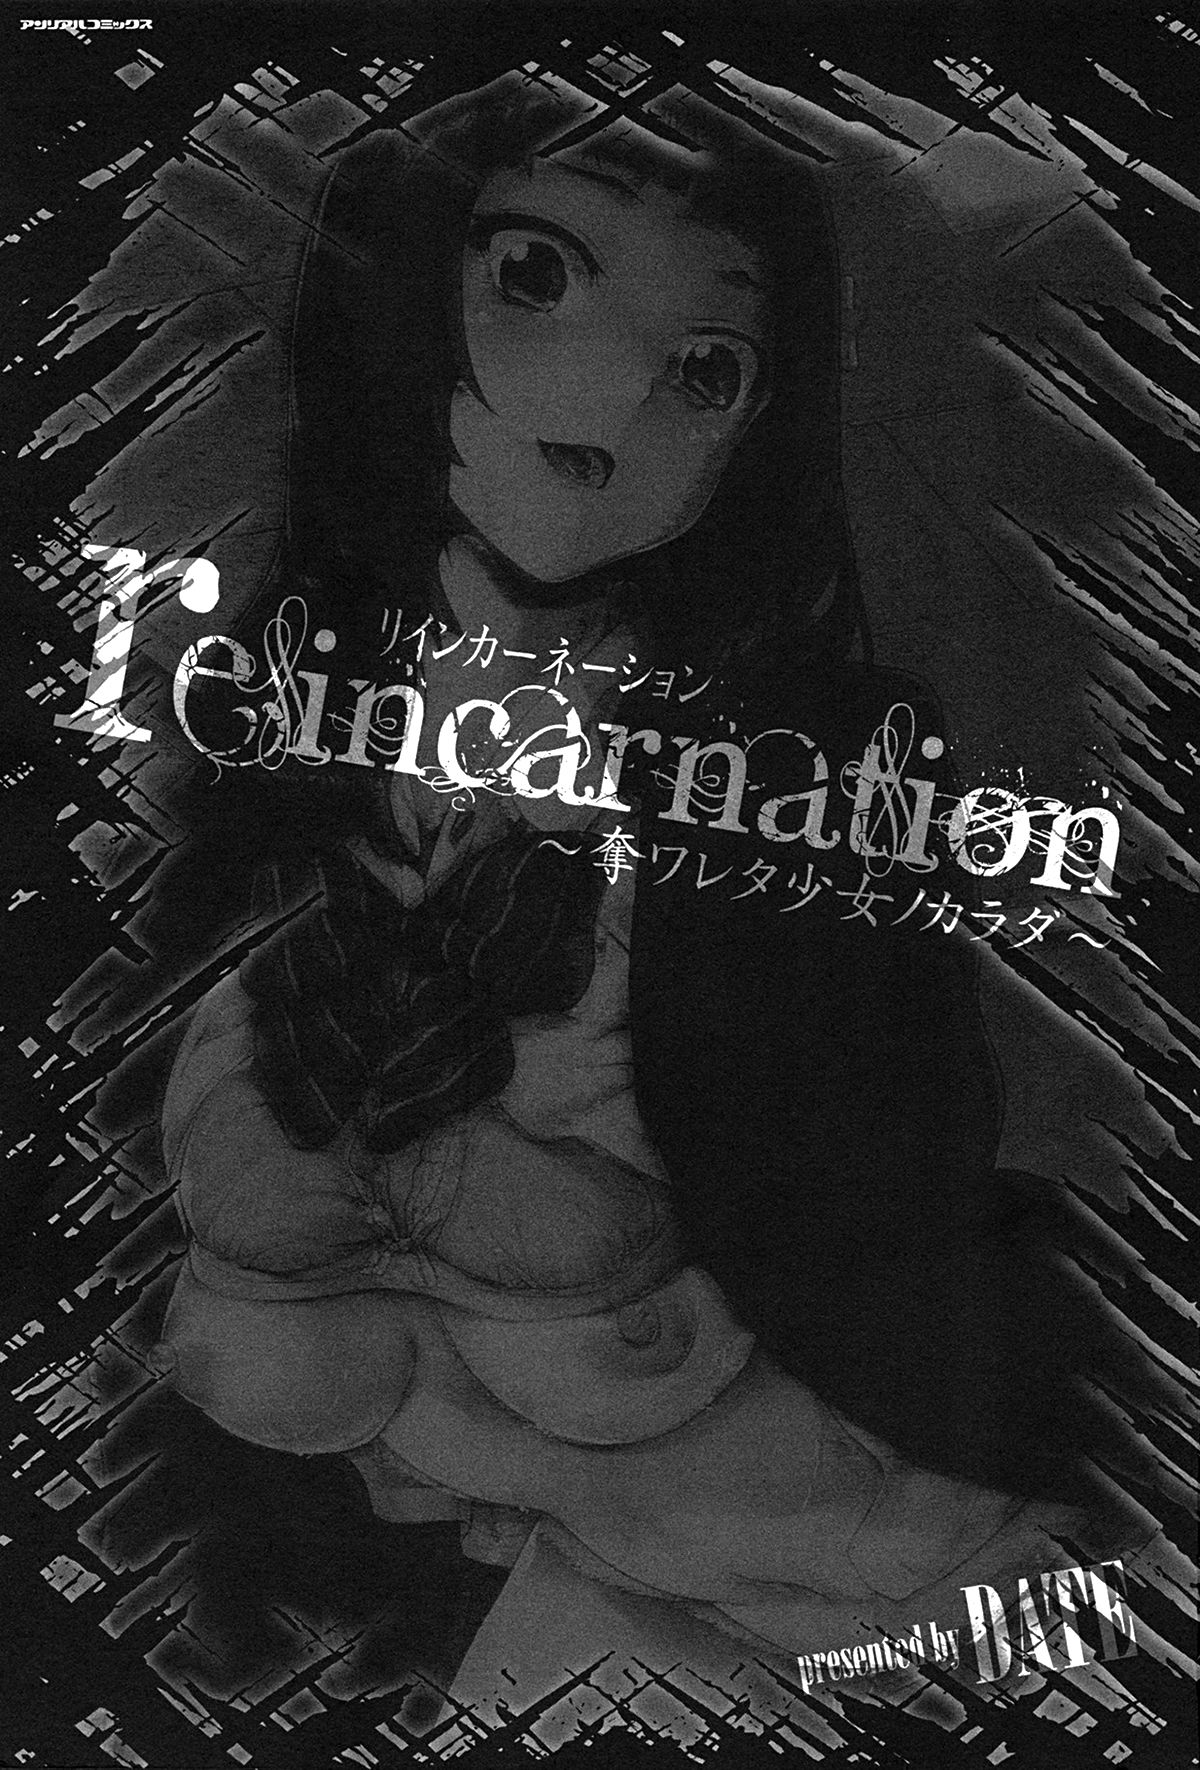 [DATE] reincarnation ~Ubawareta Shoujo no Karada~ Ch. 1 [English] [Debris Scans] [Decensored] [DATE] reincarnation ~奪ワレタ少女ノカラダ~ 第1話 [英訳] [無修正]